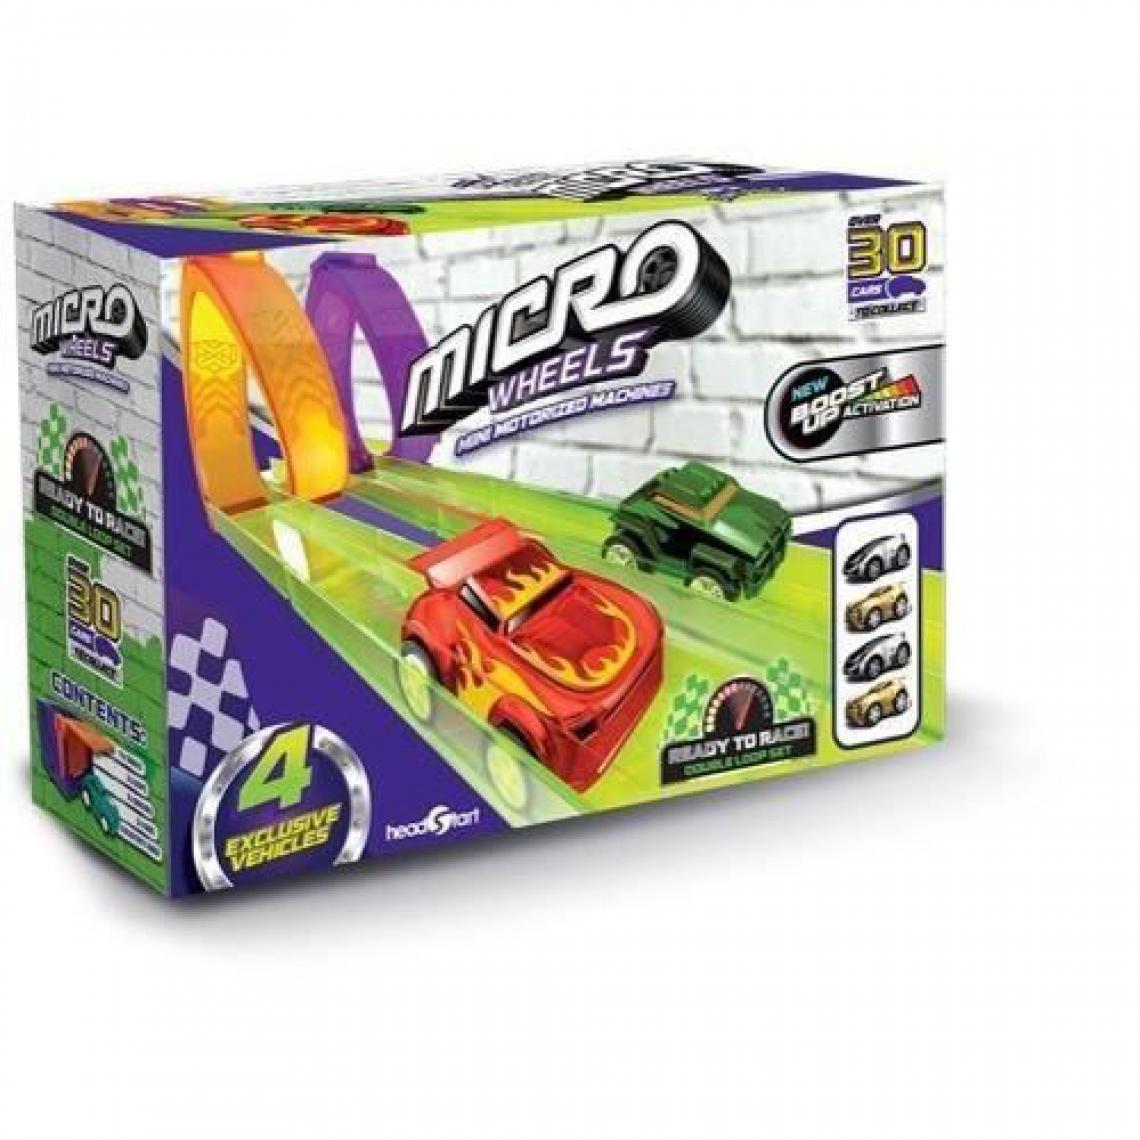 Splash Toys - MICRO WHEELS - voitures miniatures wheels super - set de jeu 2 loops + 2 garages + 4 voitures - Garages